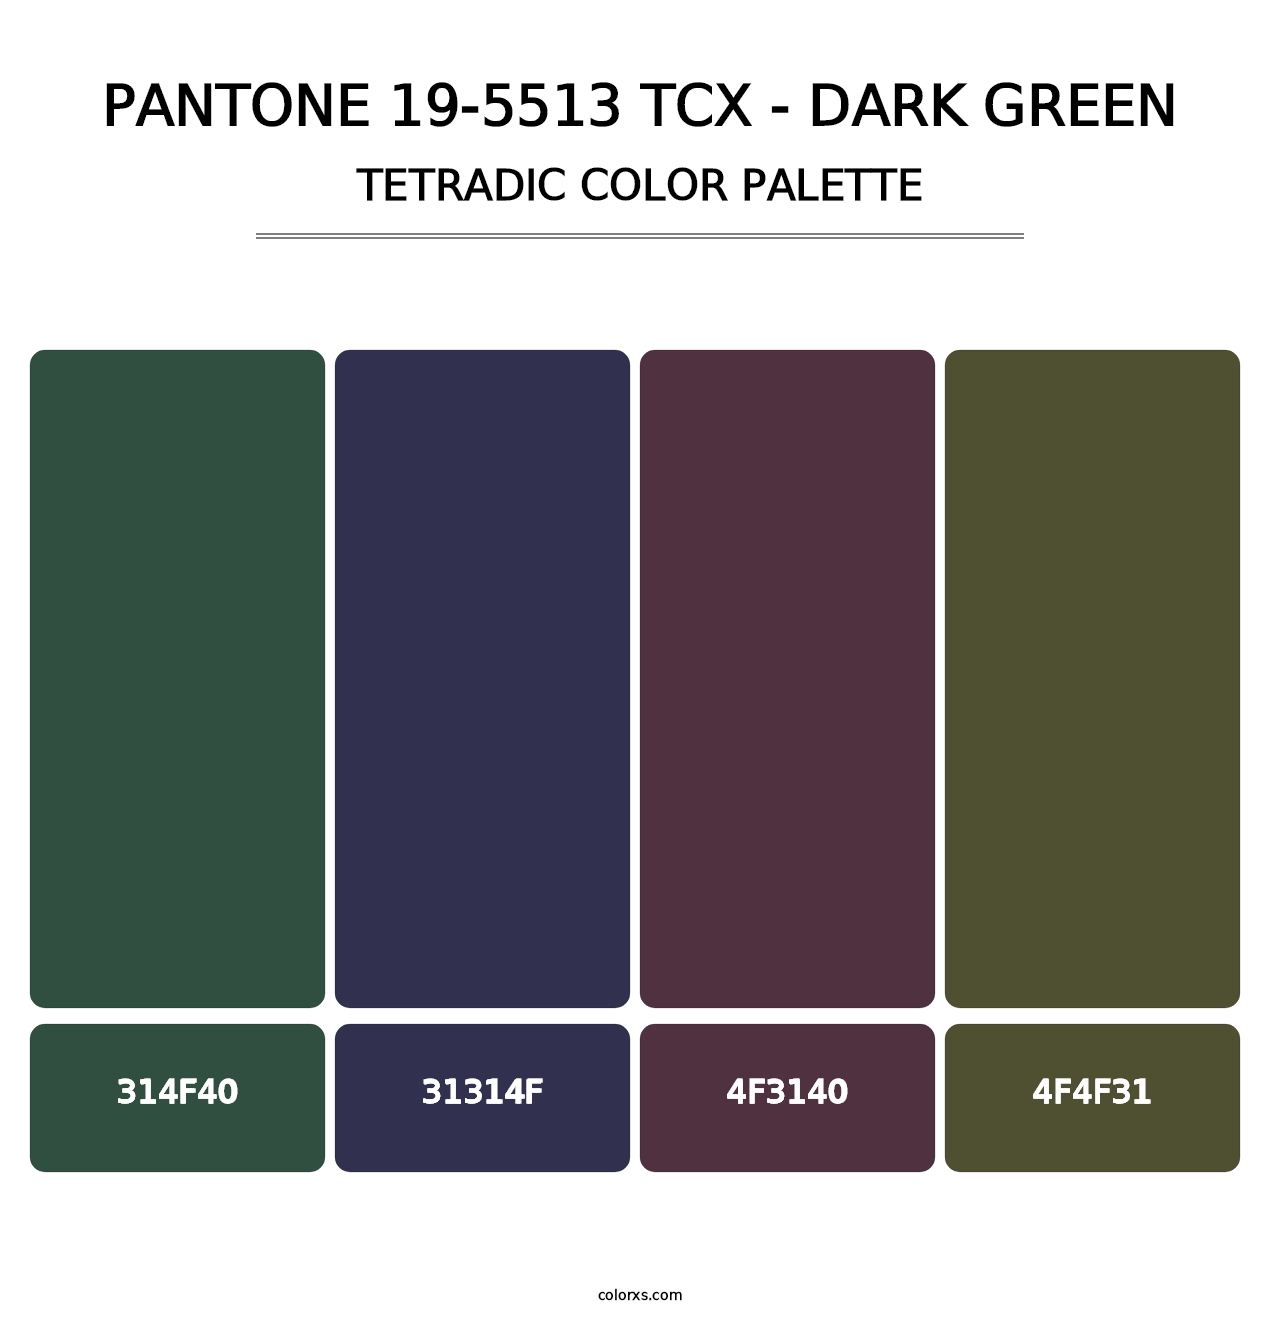 PANTONE 19-5513 TCX - Dark Green - Tetradic Color Palette